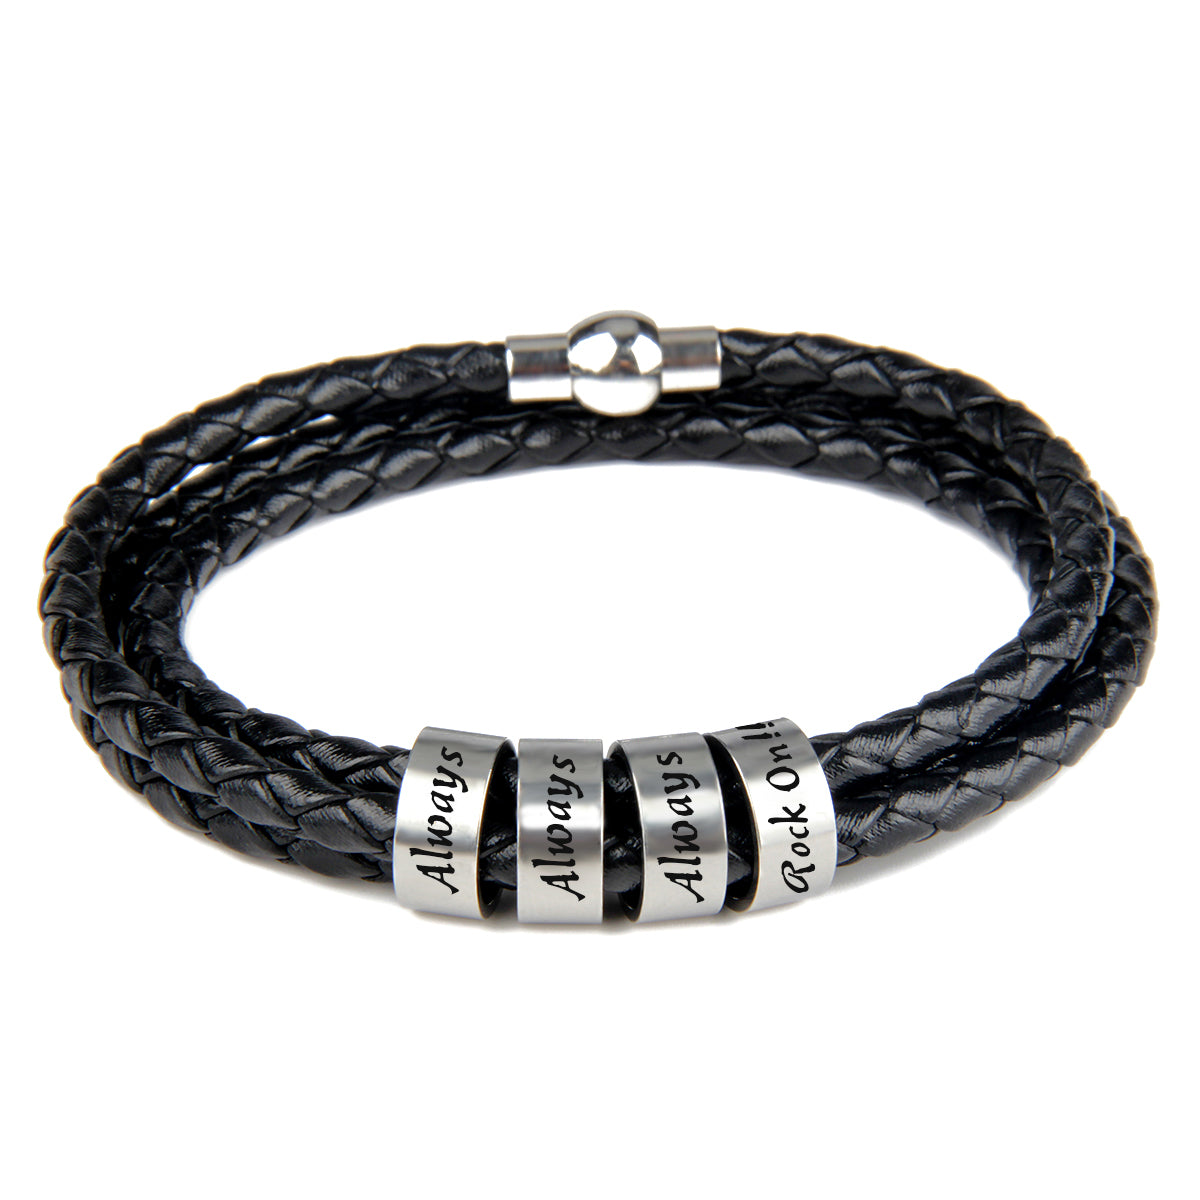 AC30U004 ROCK ON!!! Engraved Titanium Beads Leather Bracelet, black or brown